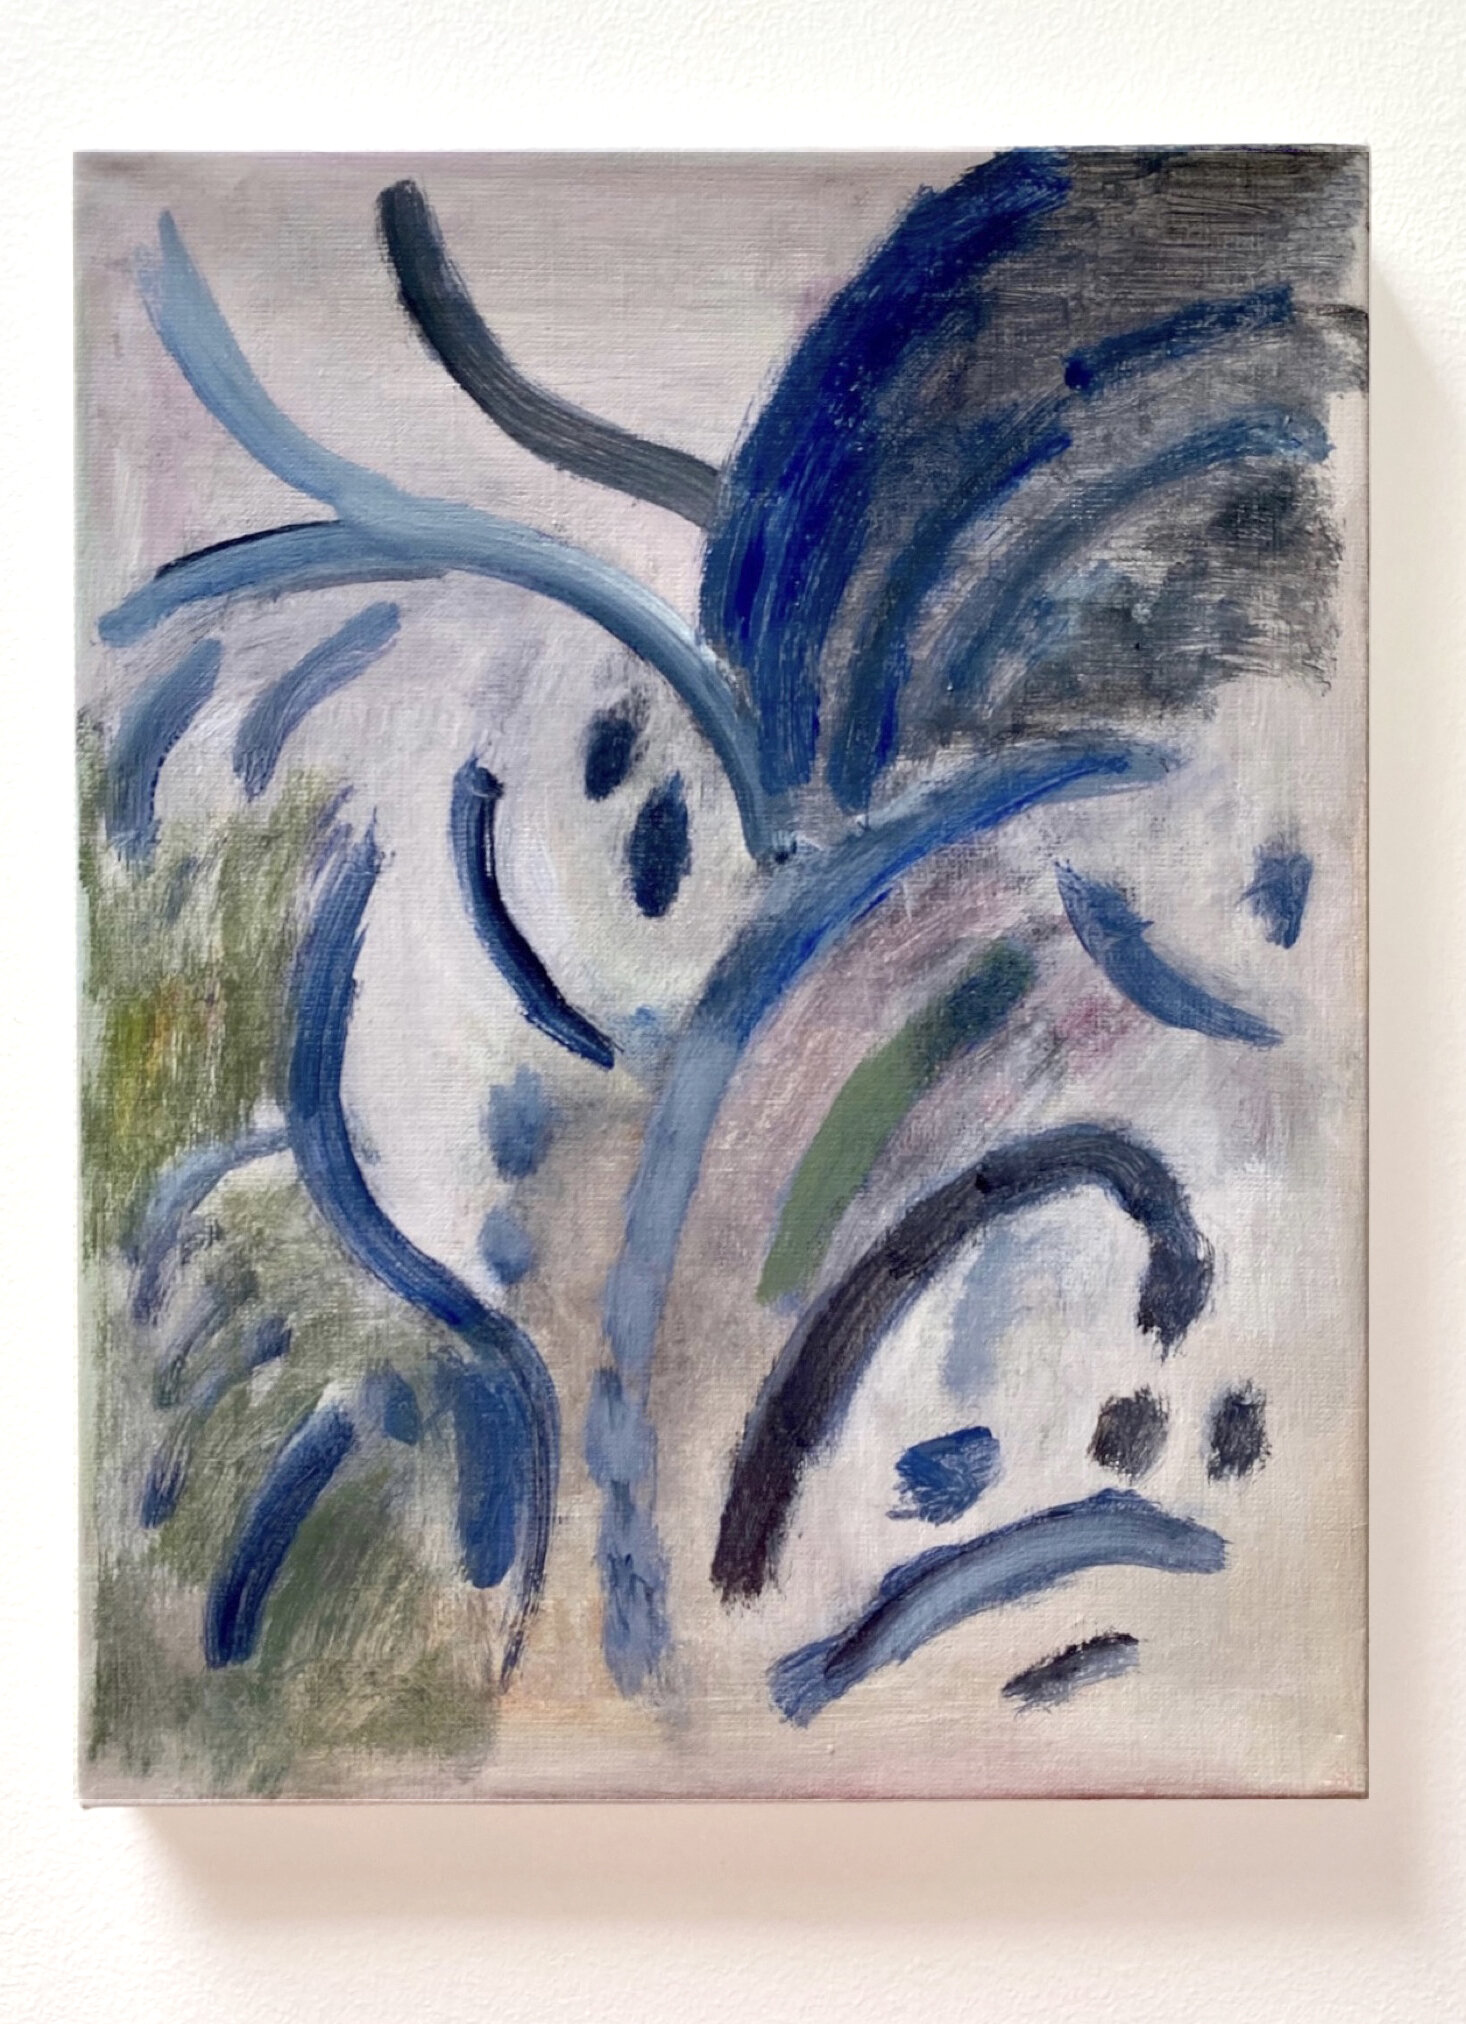  An Hoang, Ridge, 2020, acrylic on canvas, 14 x 11 inches 